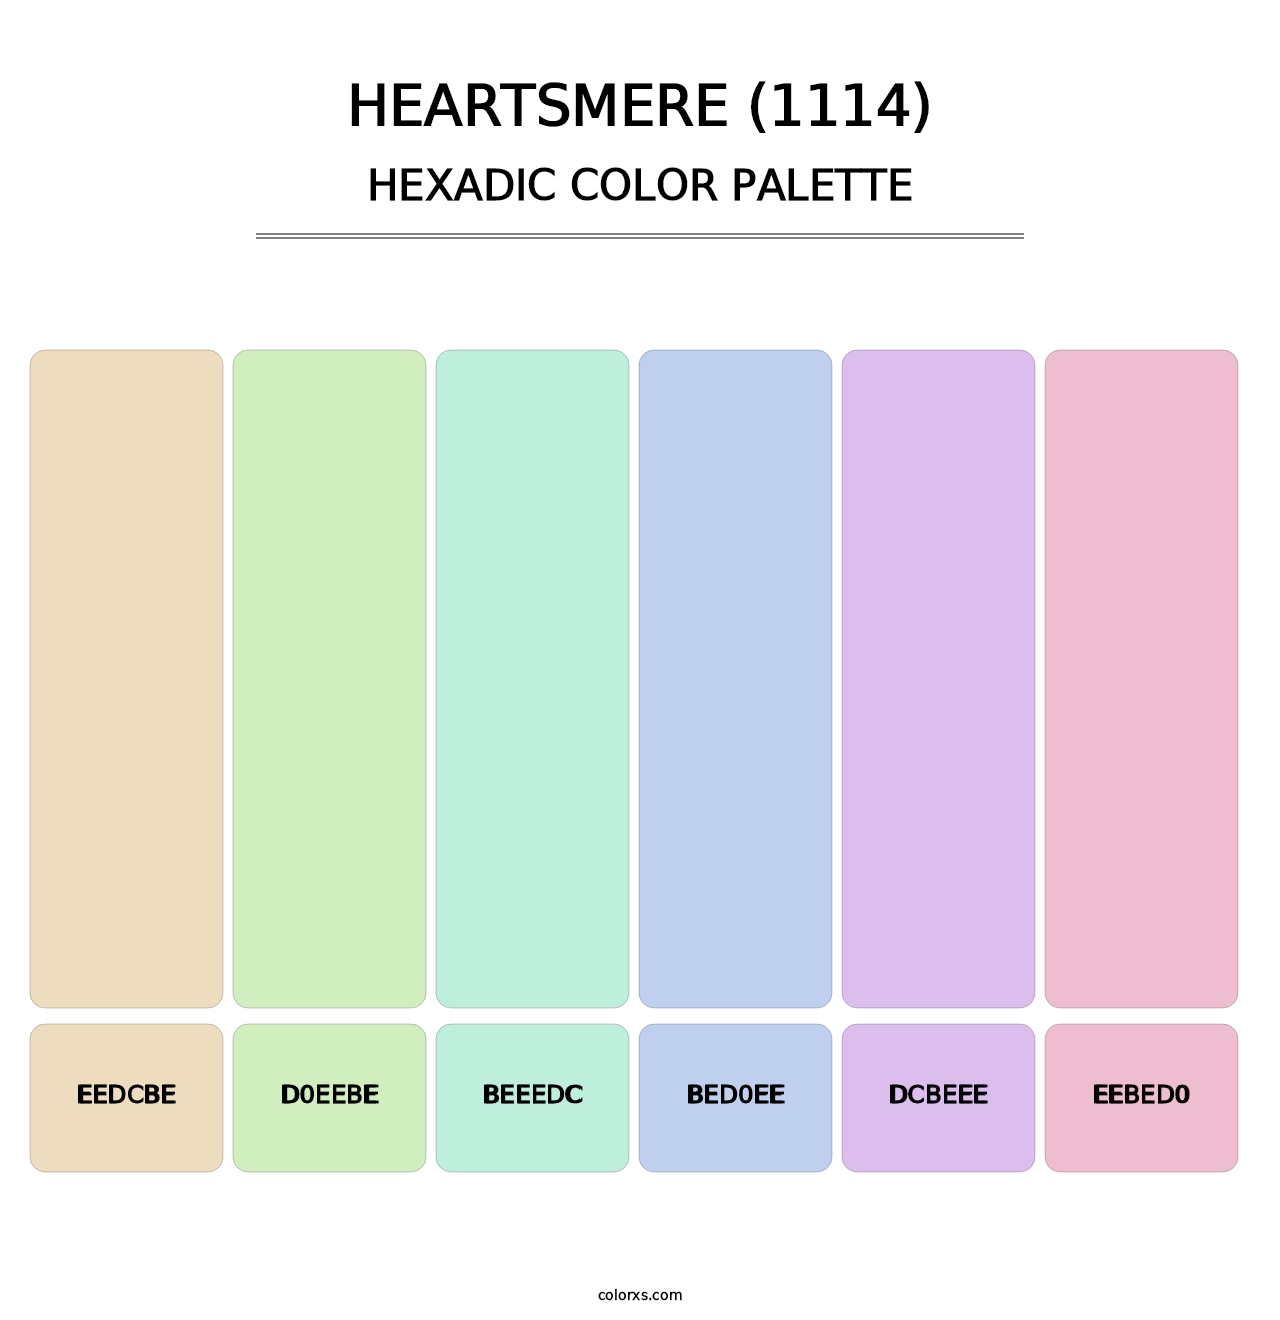 Heartsmere (1114) - Hexadic Color Palette